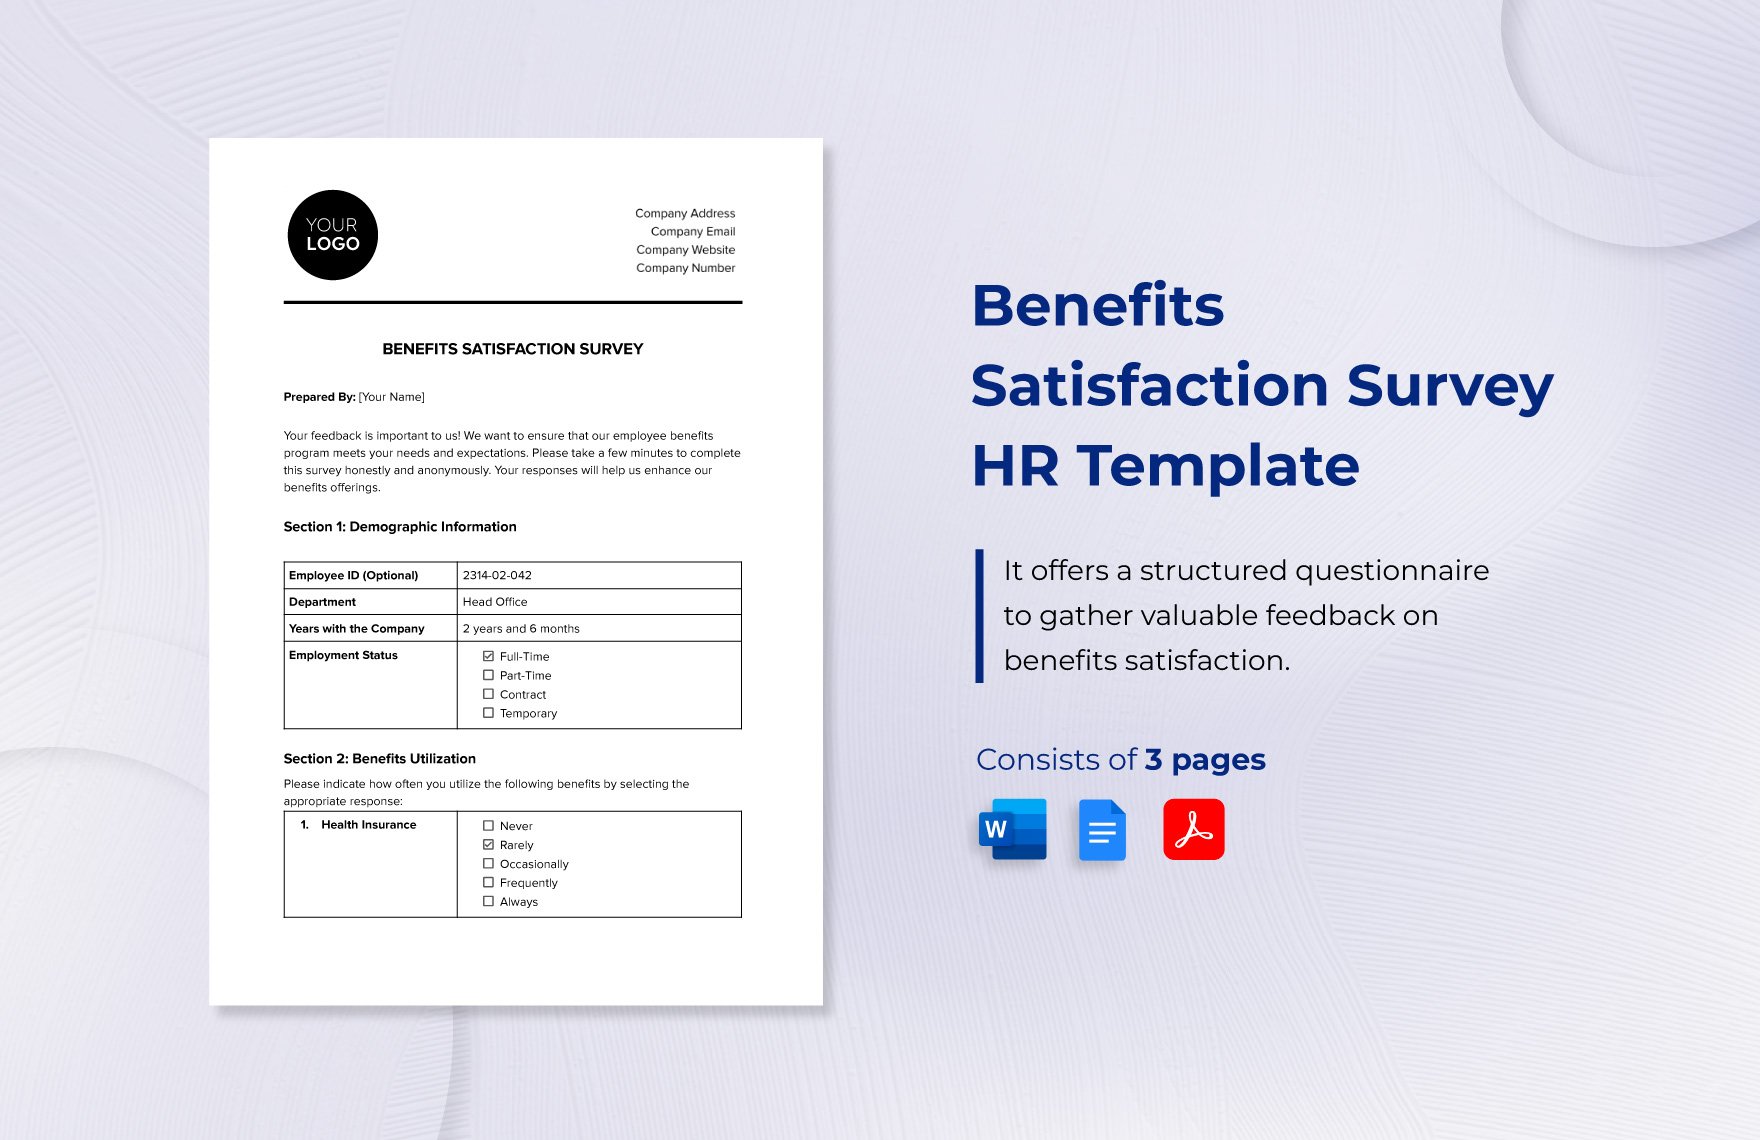 Benefits Satisfaction Survey HR Template